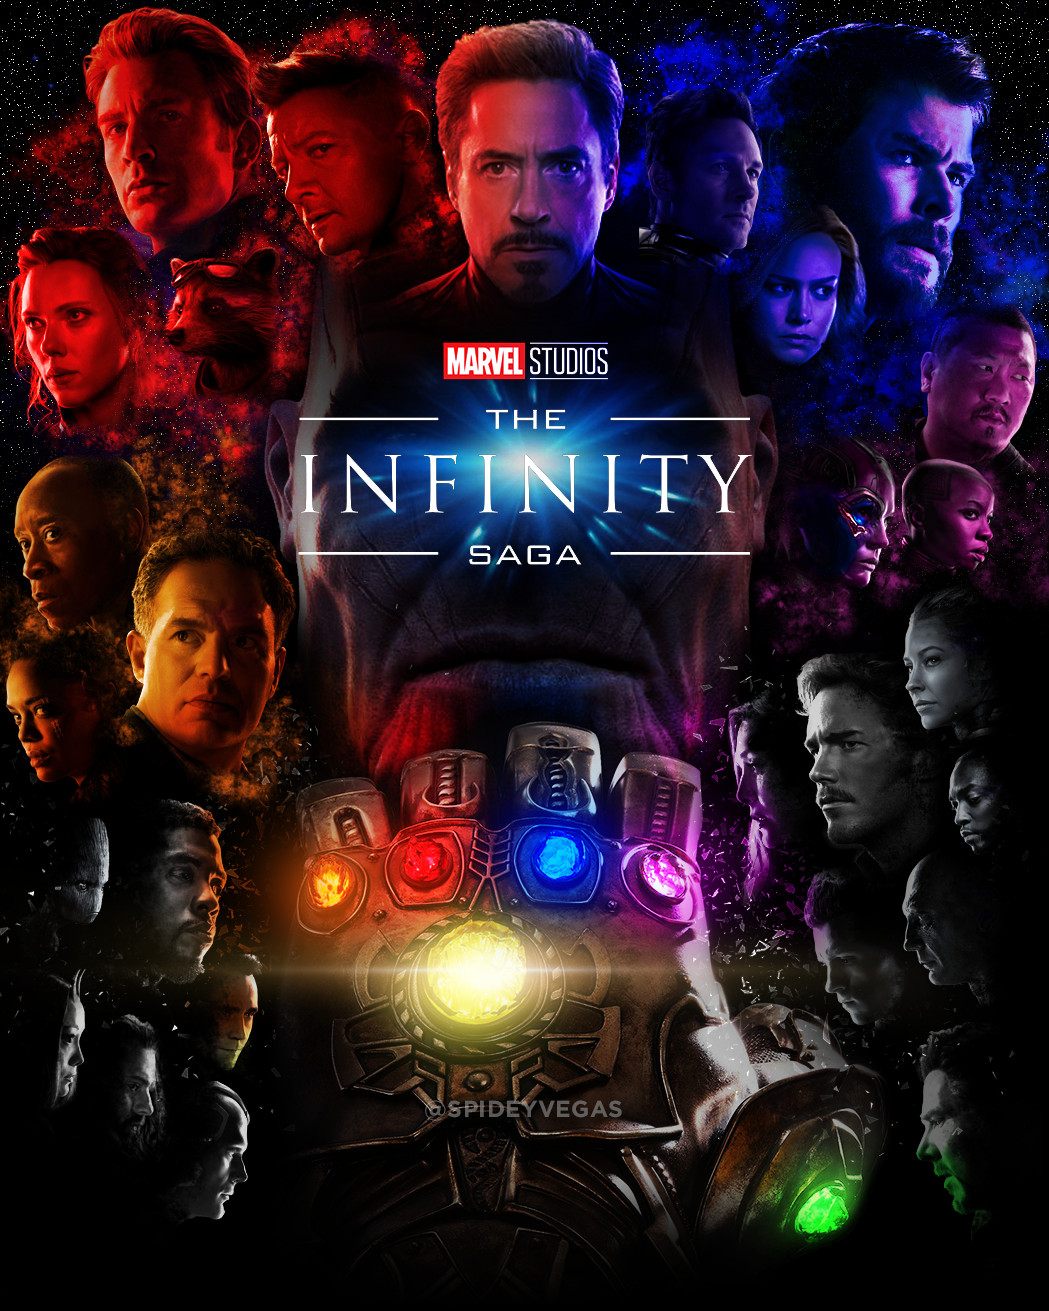 The Infinity Saga poster design!